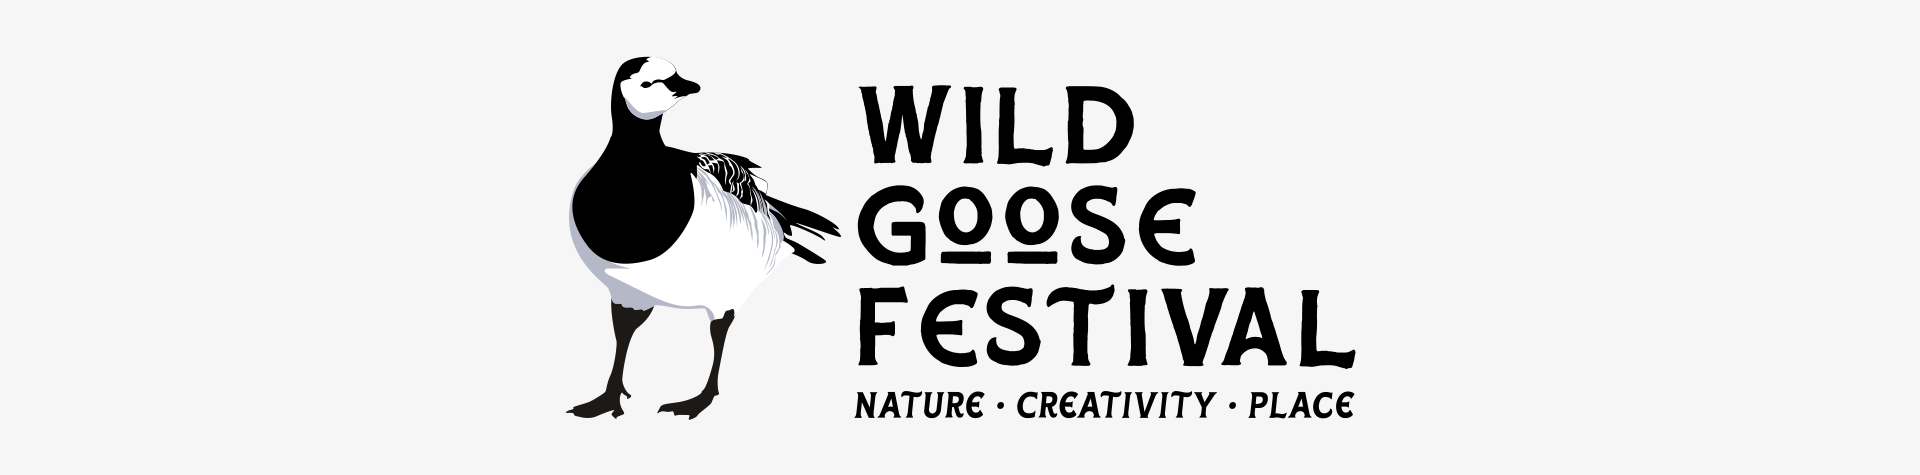 Wild Goose Festival Web Banner 1920 Px